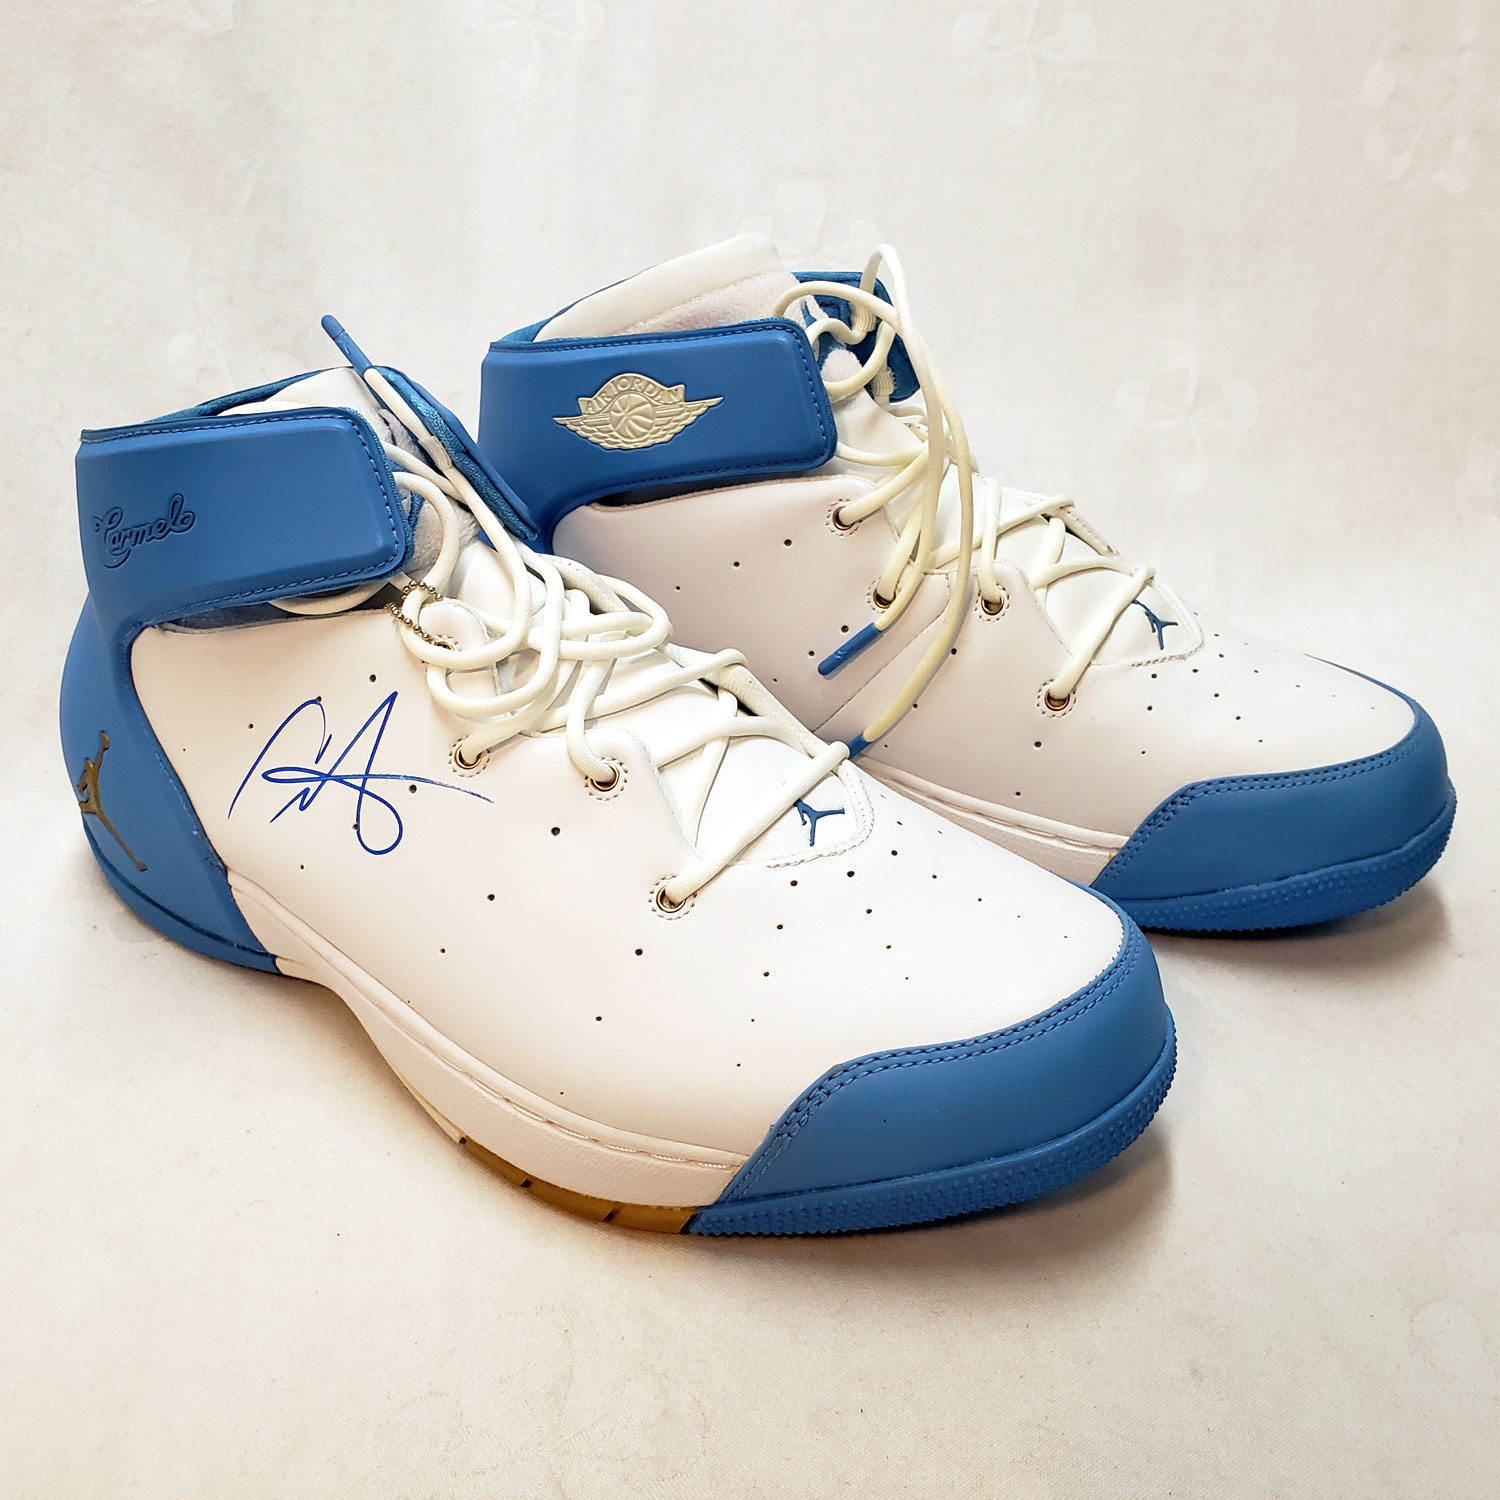 Carmelo Anthony Signed Jordan Carmelo 1.5 Sneakers SWIT Sports